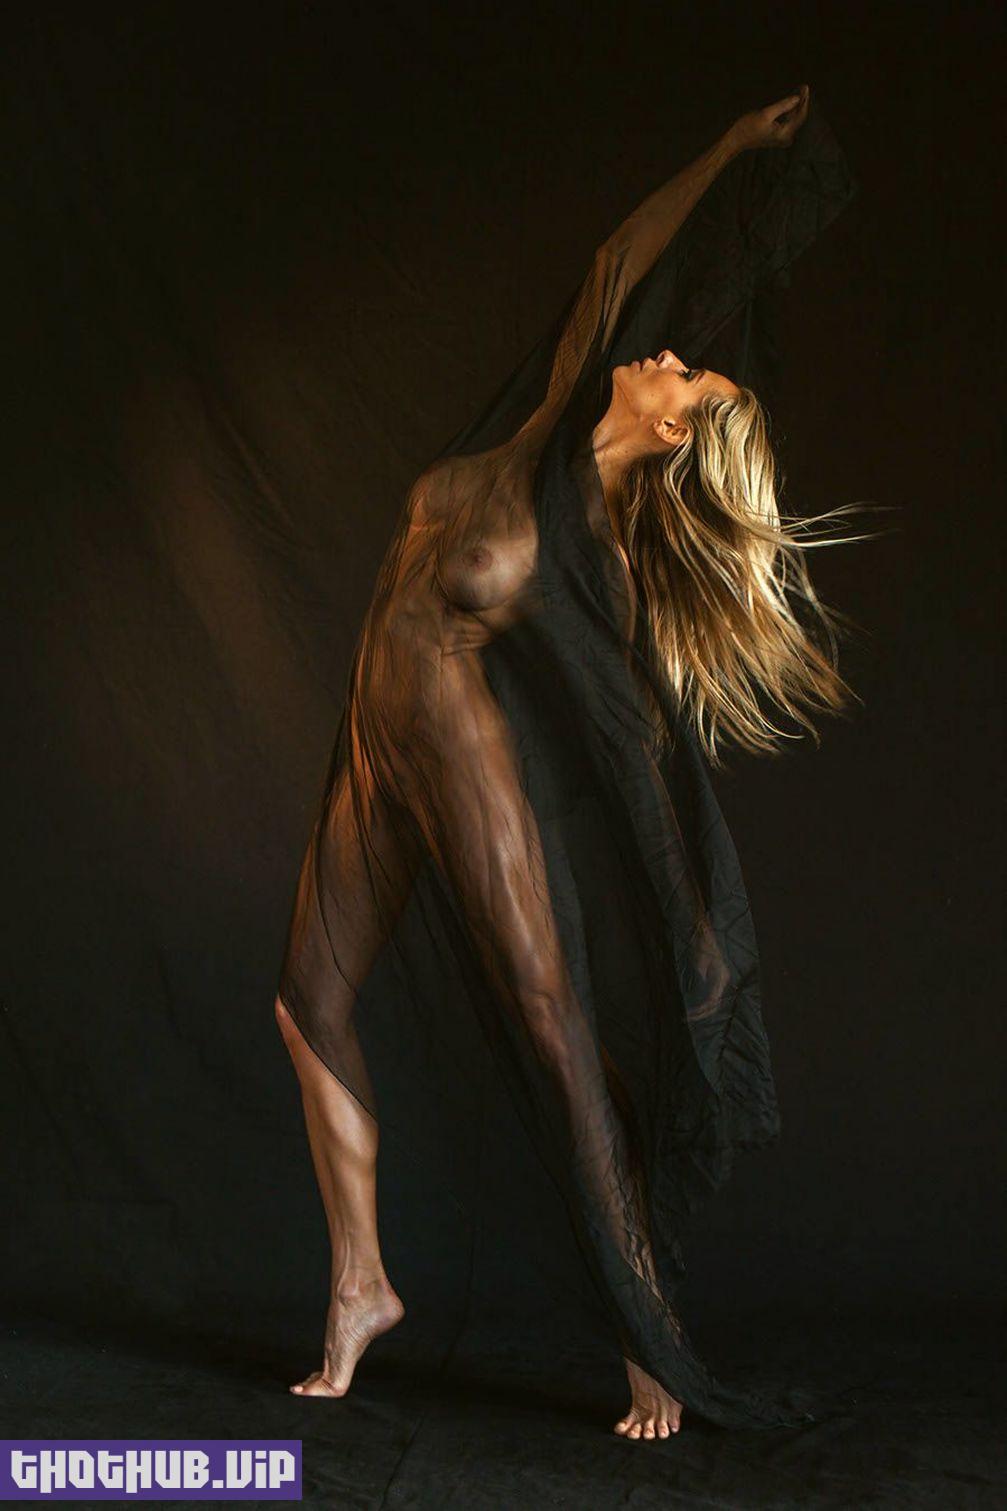 Yoga Teacher Jesse Golden Nude Private Photo Shoot Leaked